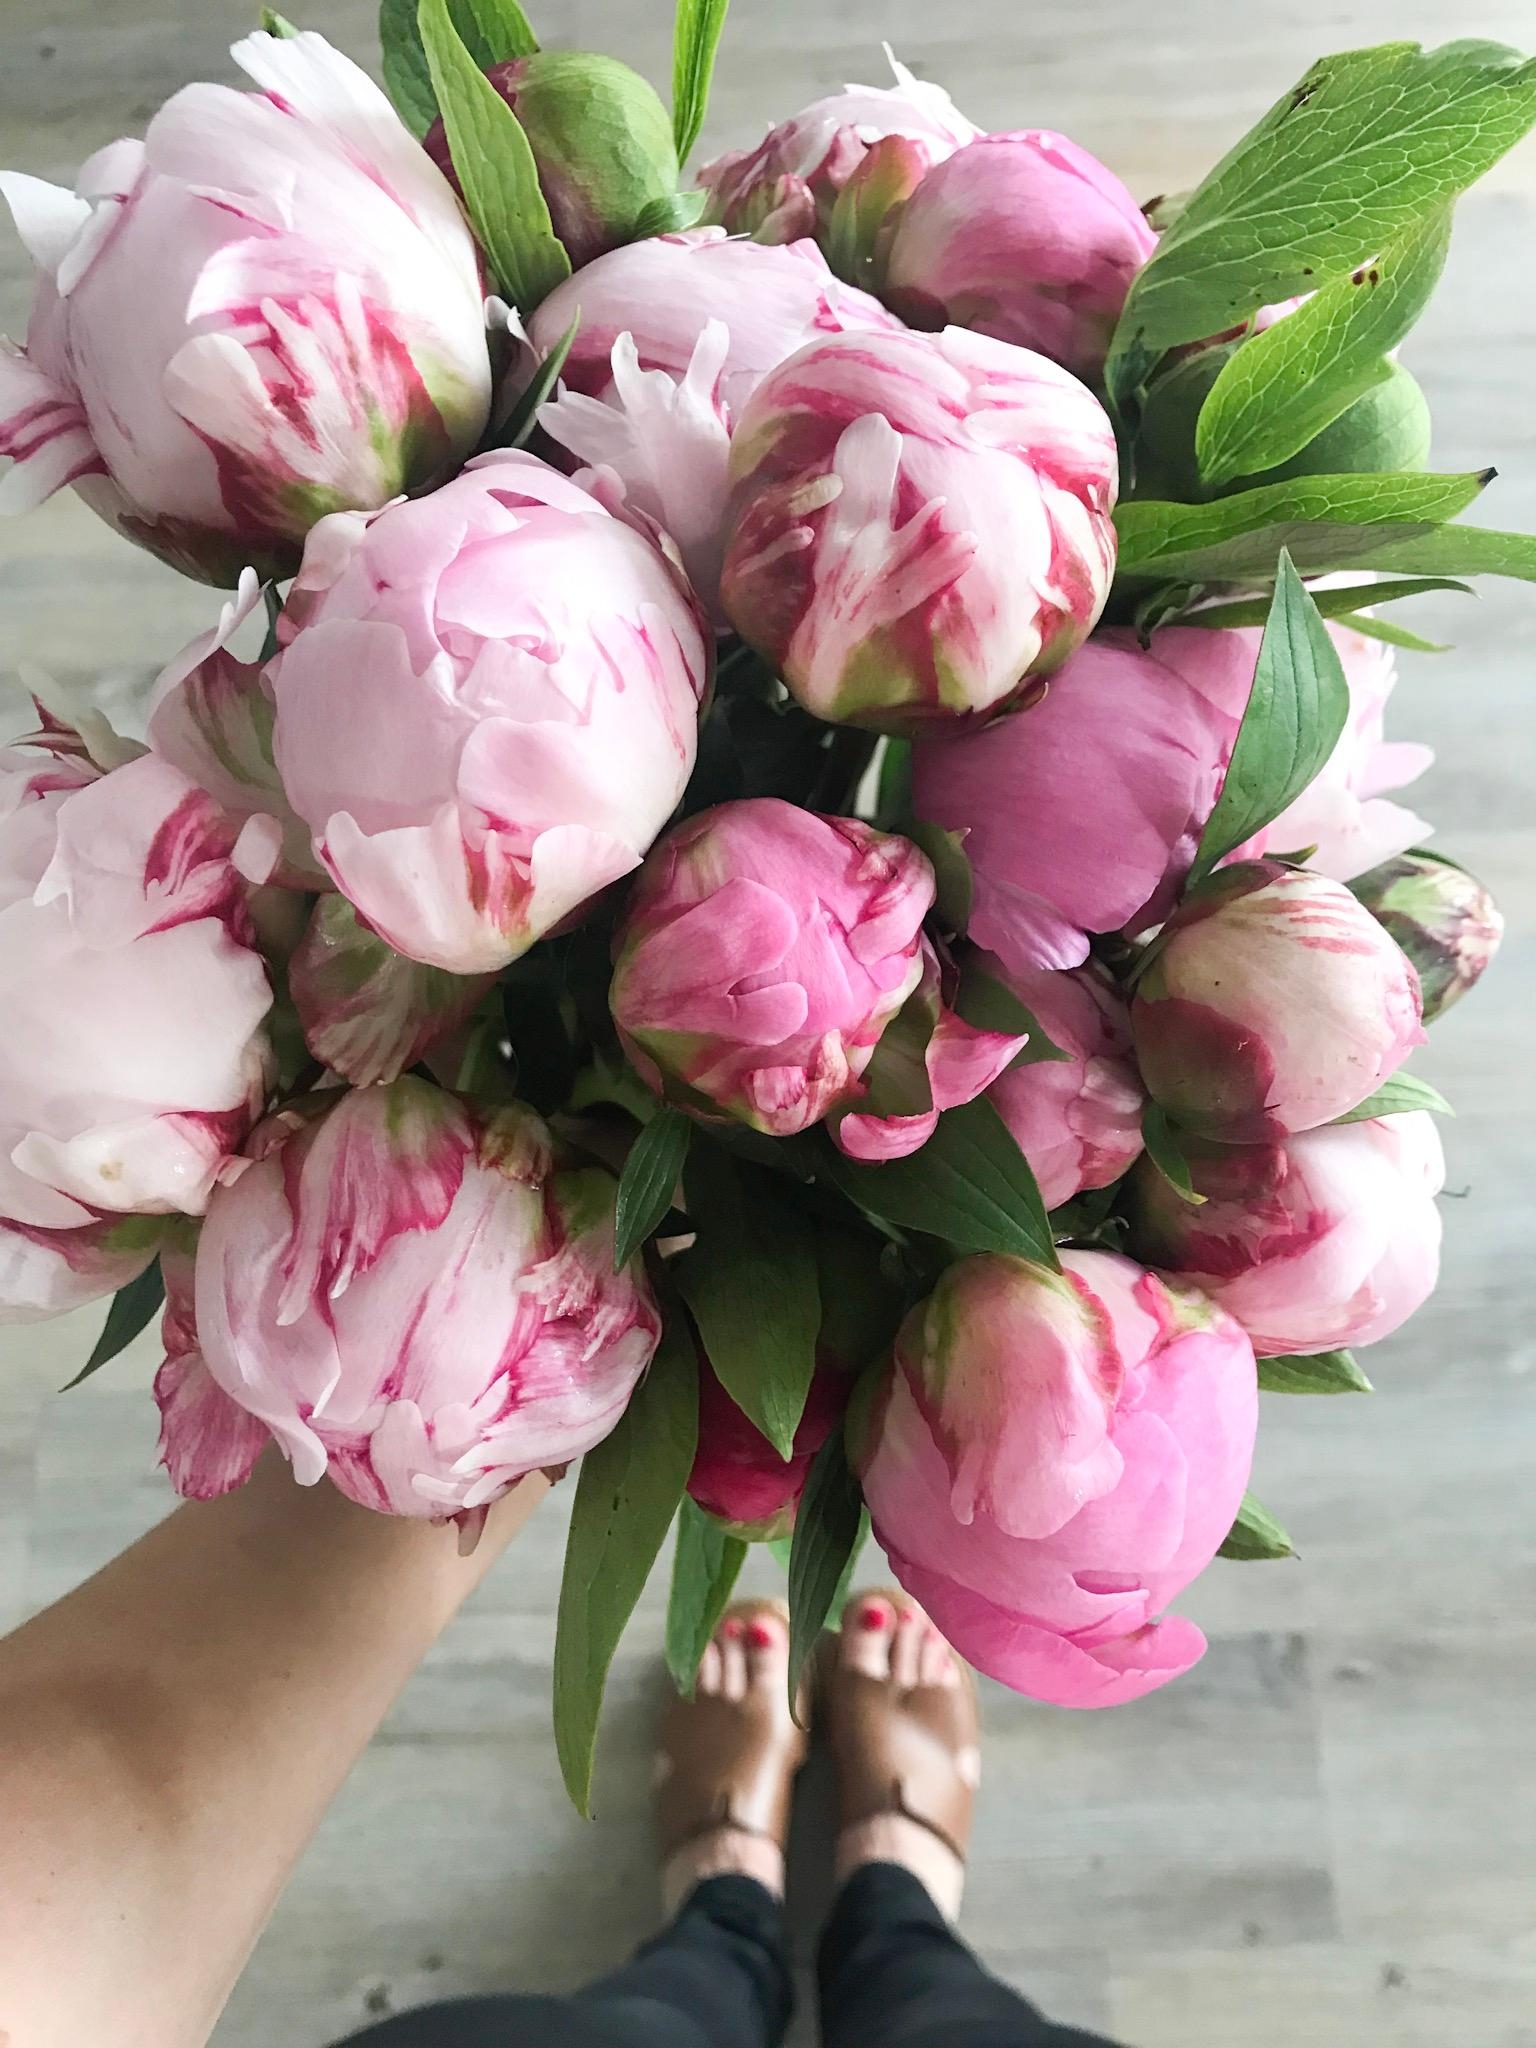 Ganz große Liebe 💕 
#peonies #freshflowers #lieblingsblumen
